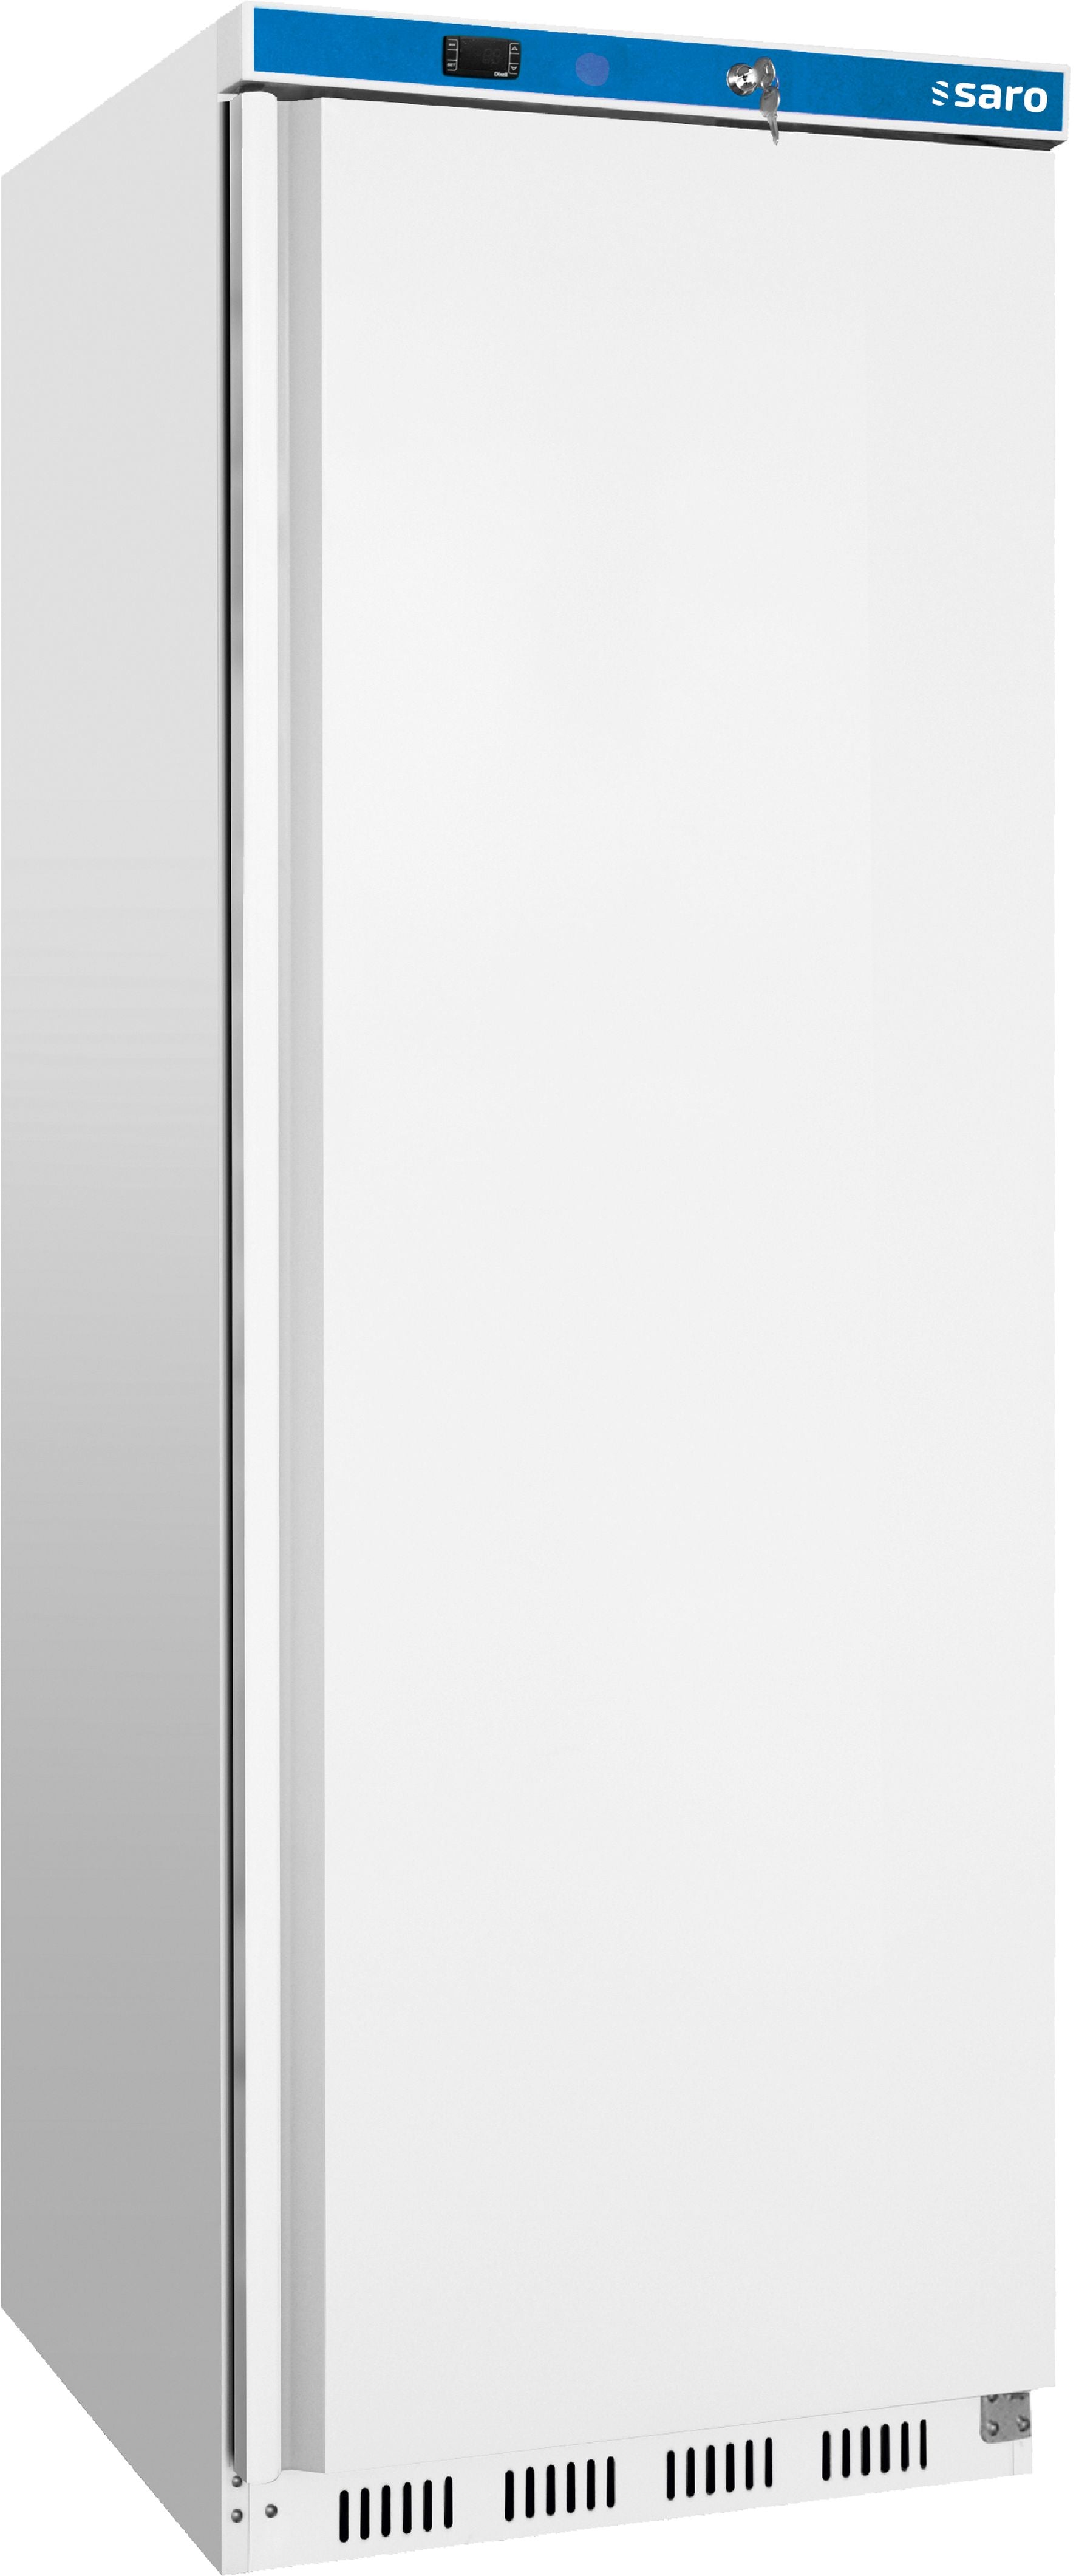 SARO Køleskab - hvid, model HK 400